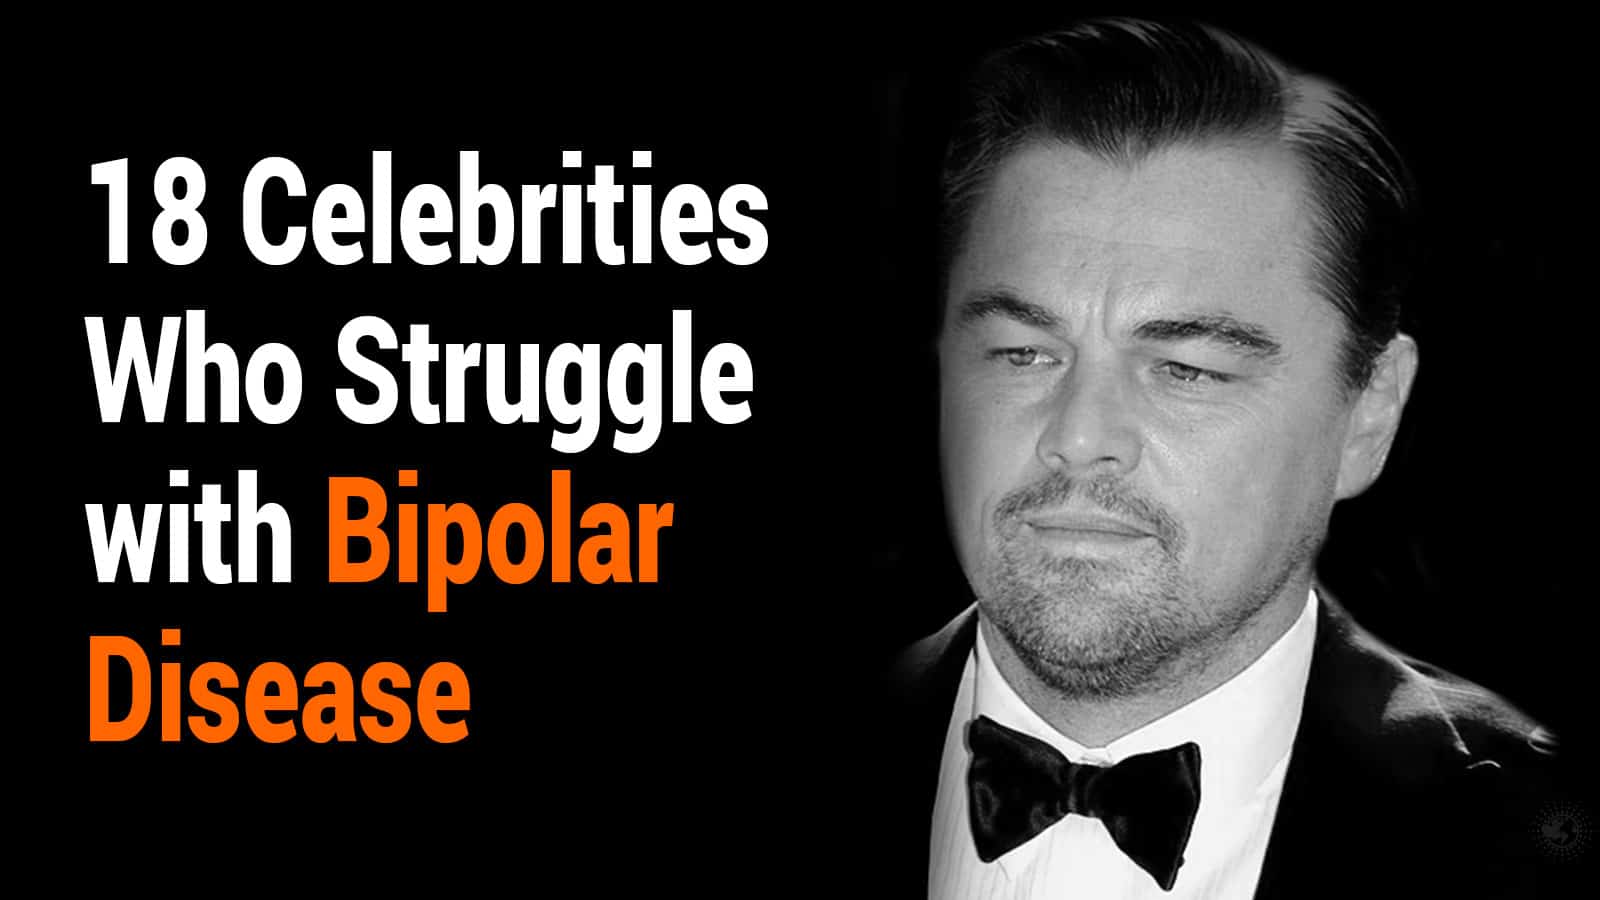 18 Celebrities Who Struggle with Bipolar Disease